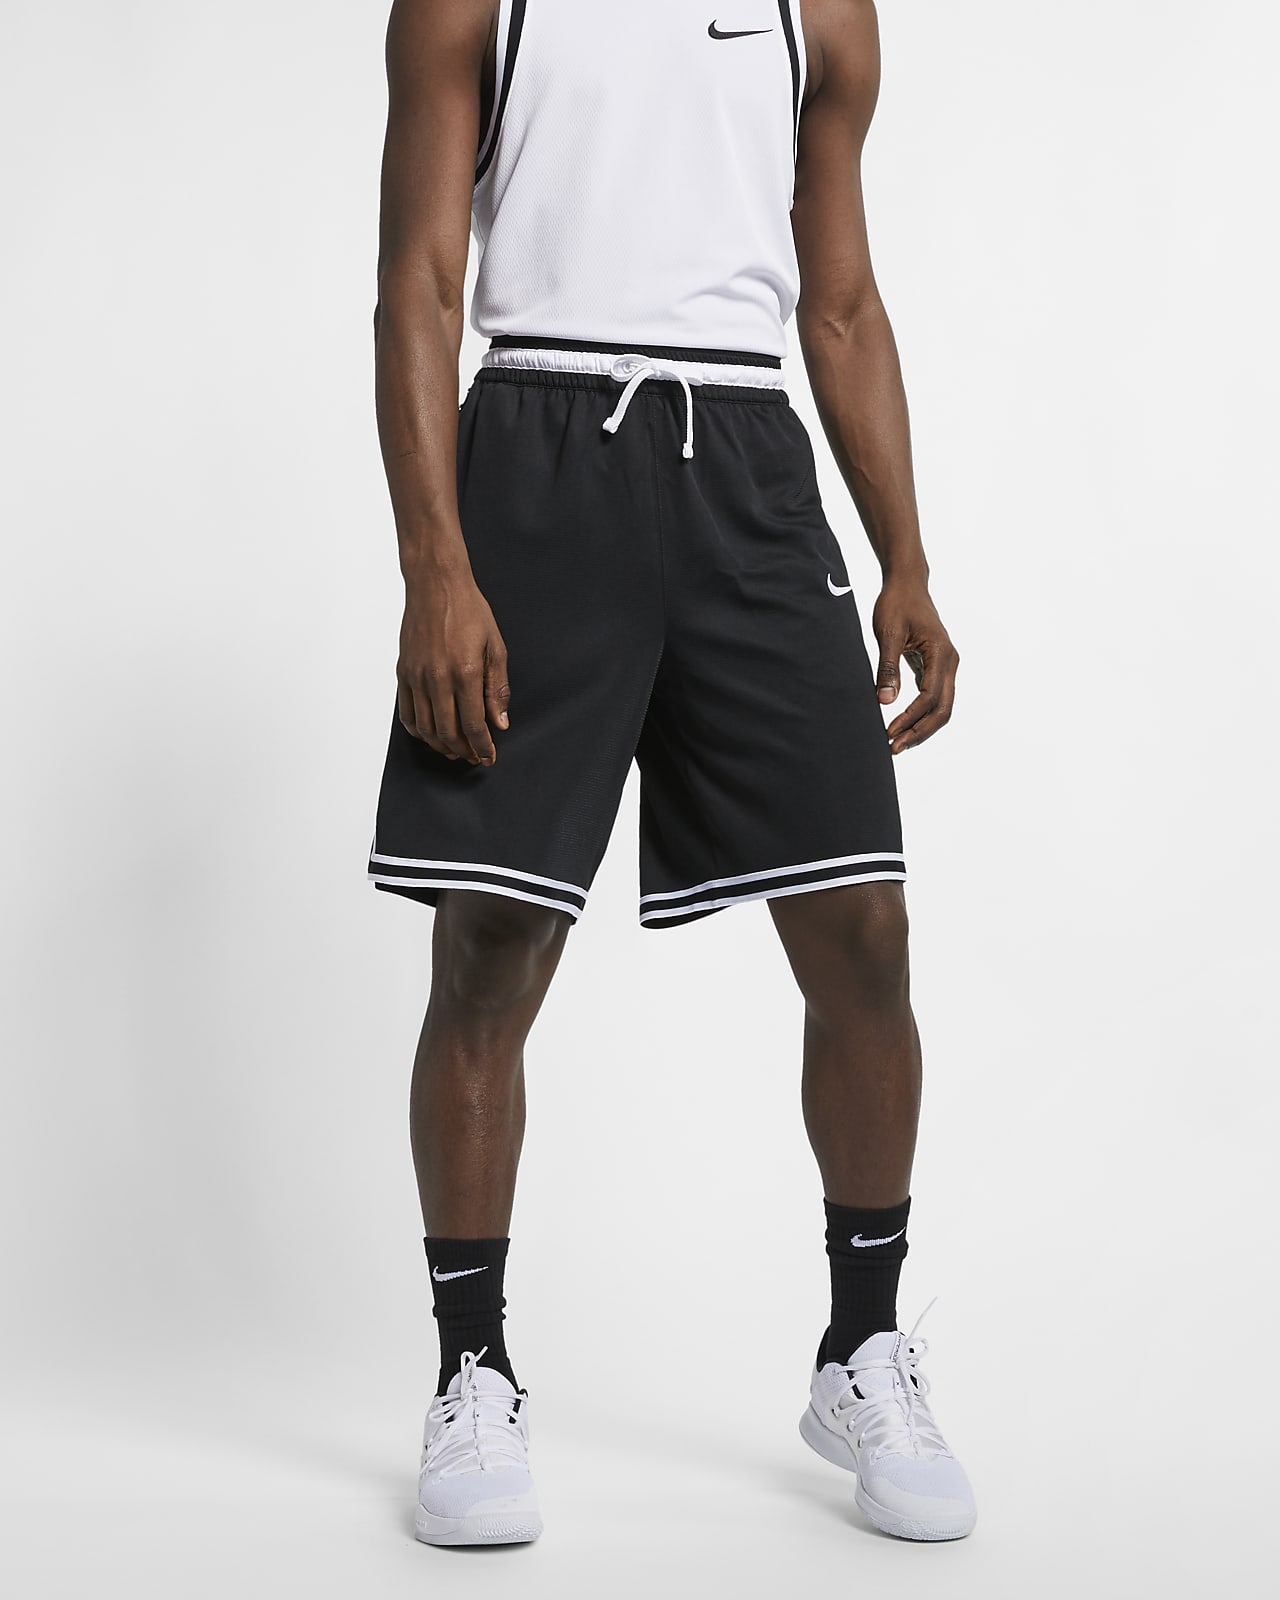 Nike Dri-FIT DNA Men's Basketball 